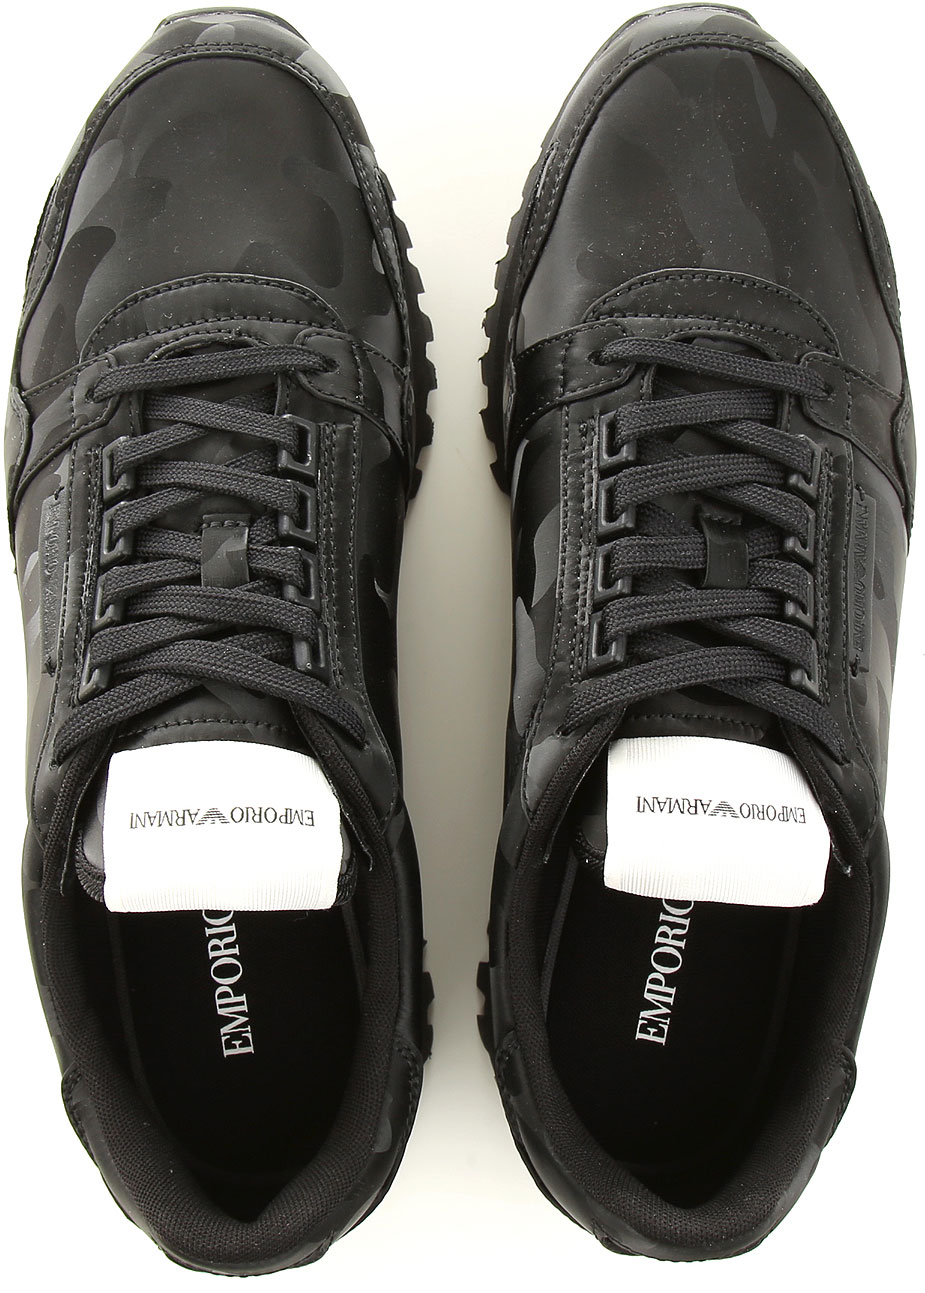 Mens Shoes Emporio Armani, Style code: x4x536-xd222-k001